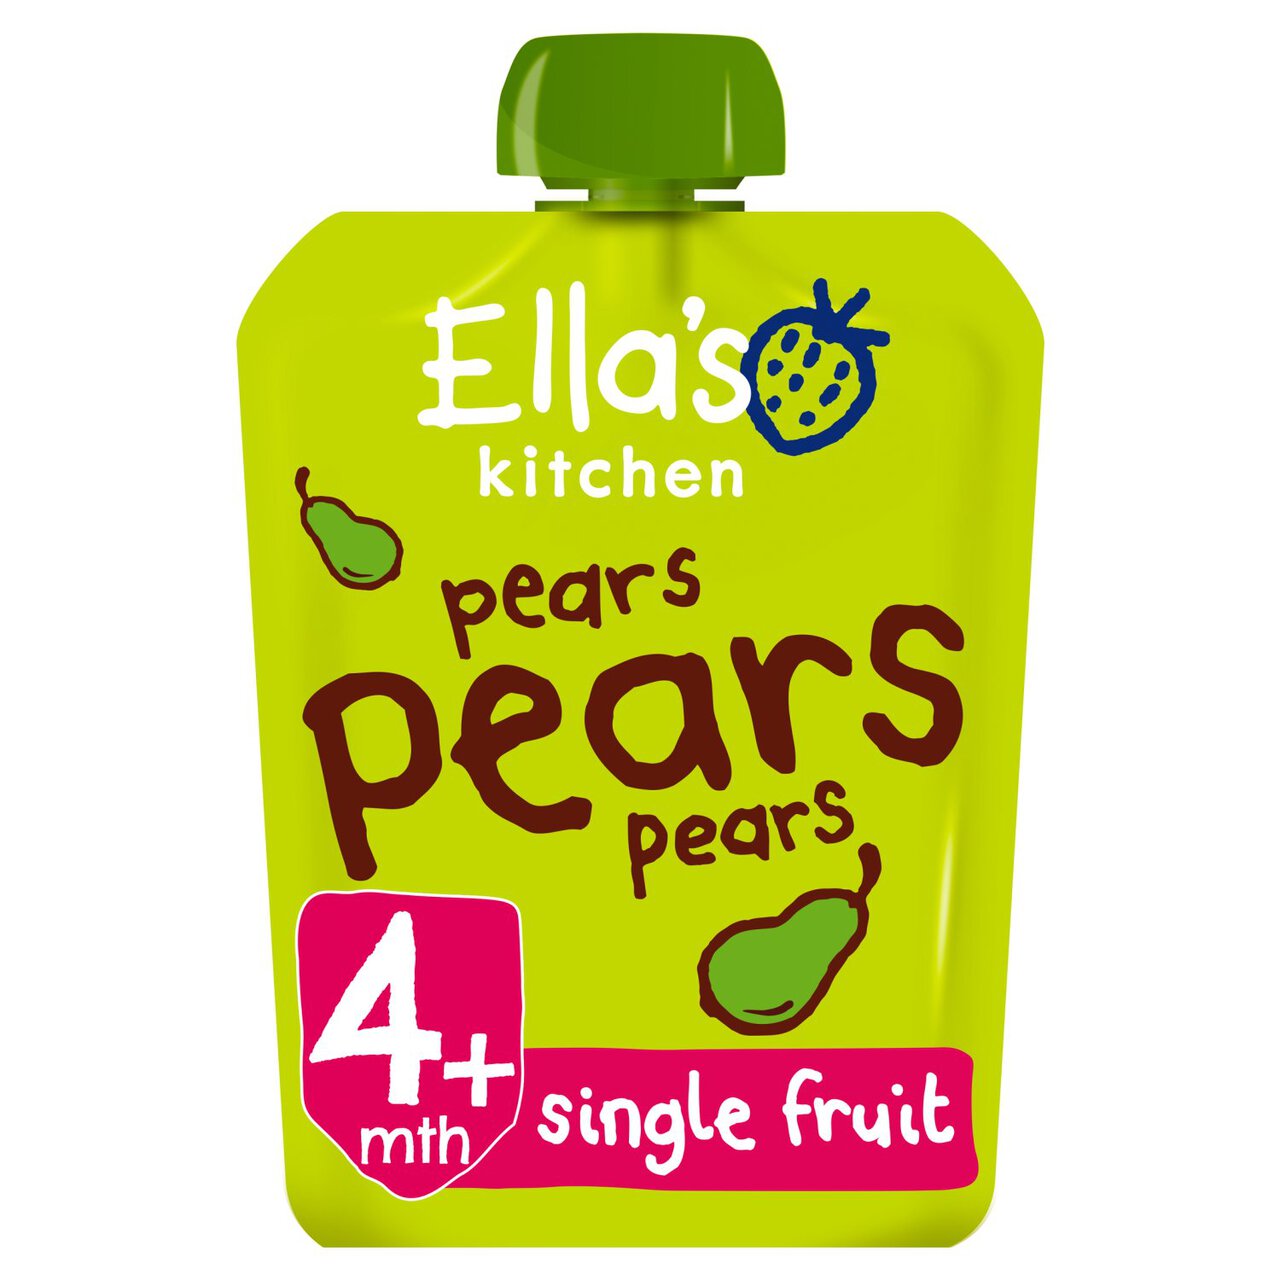 Ella's Kitchen Pears Organic Single Fruit Pouch, 4 mths+ 70g